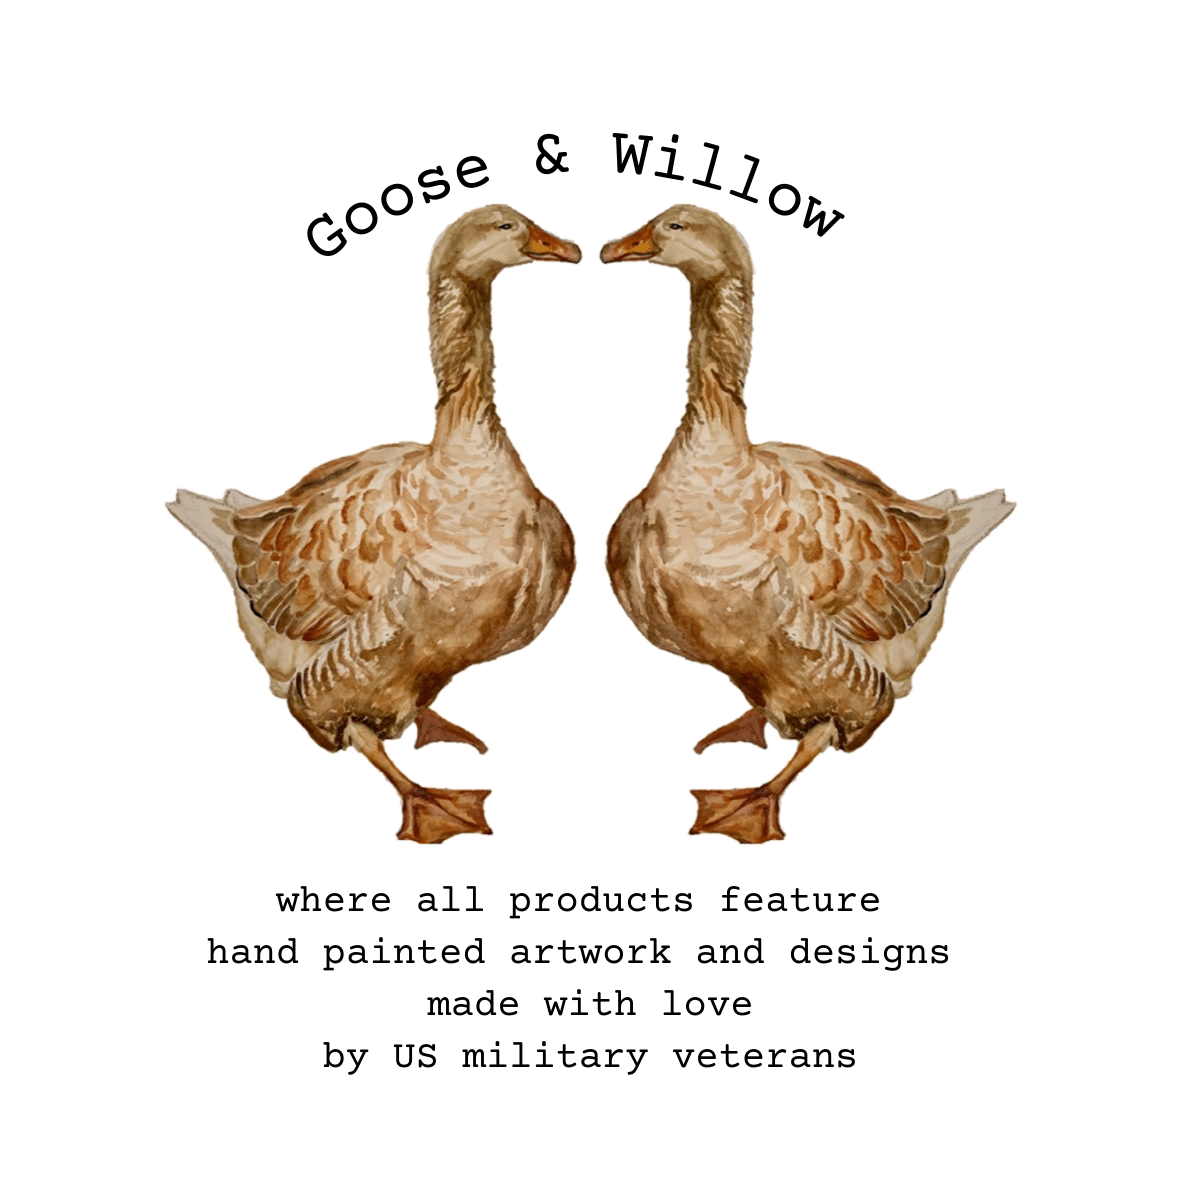 Goose & Willow